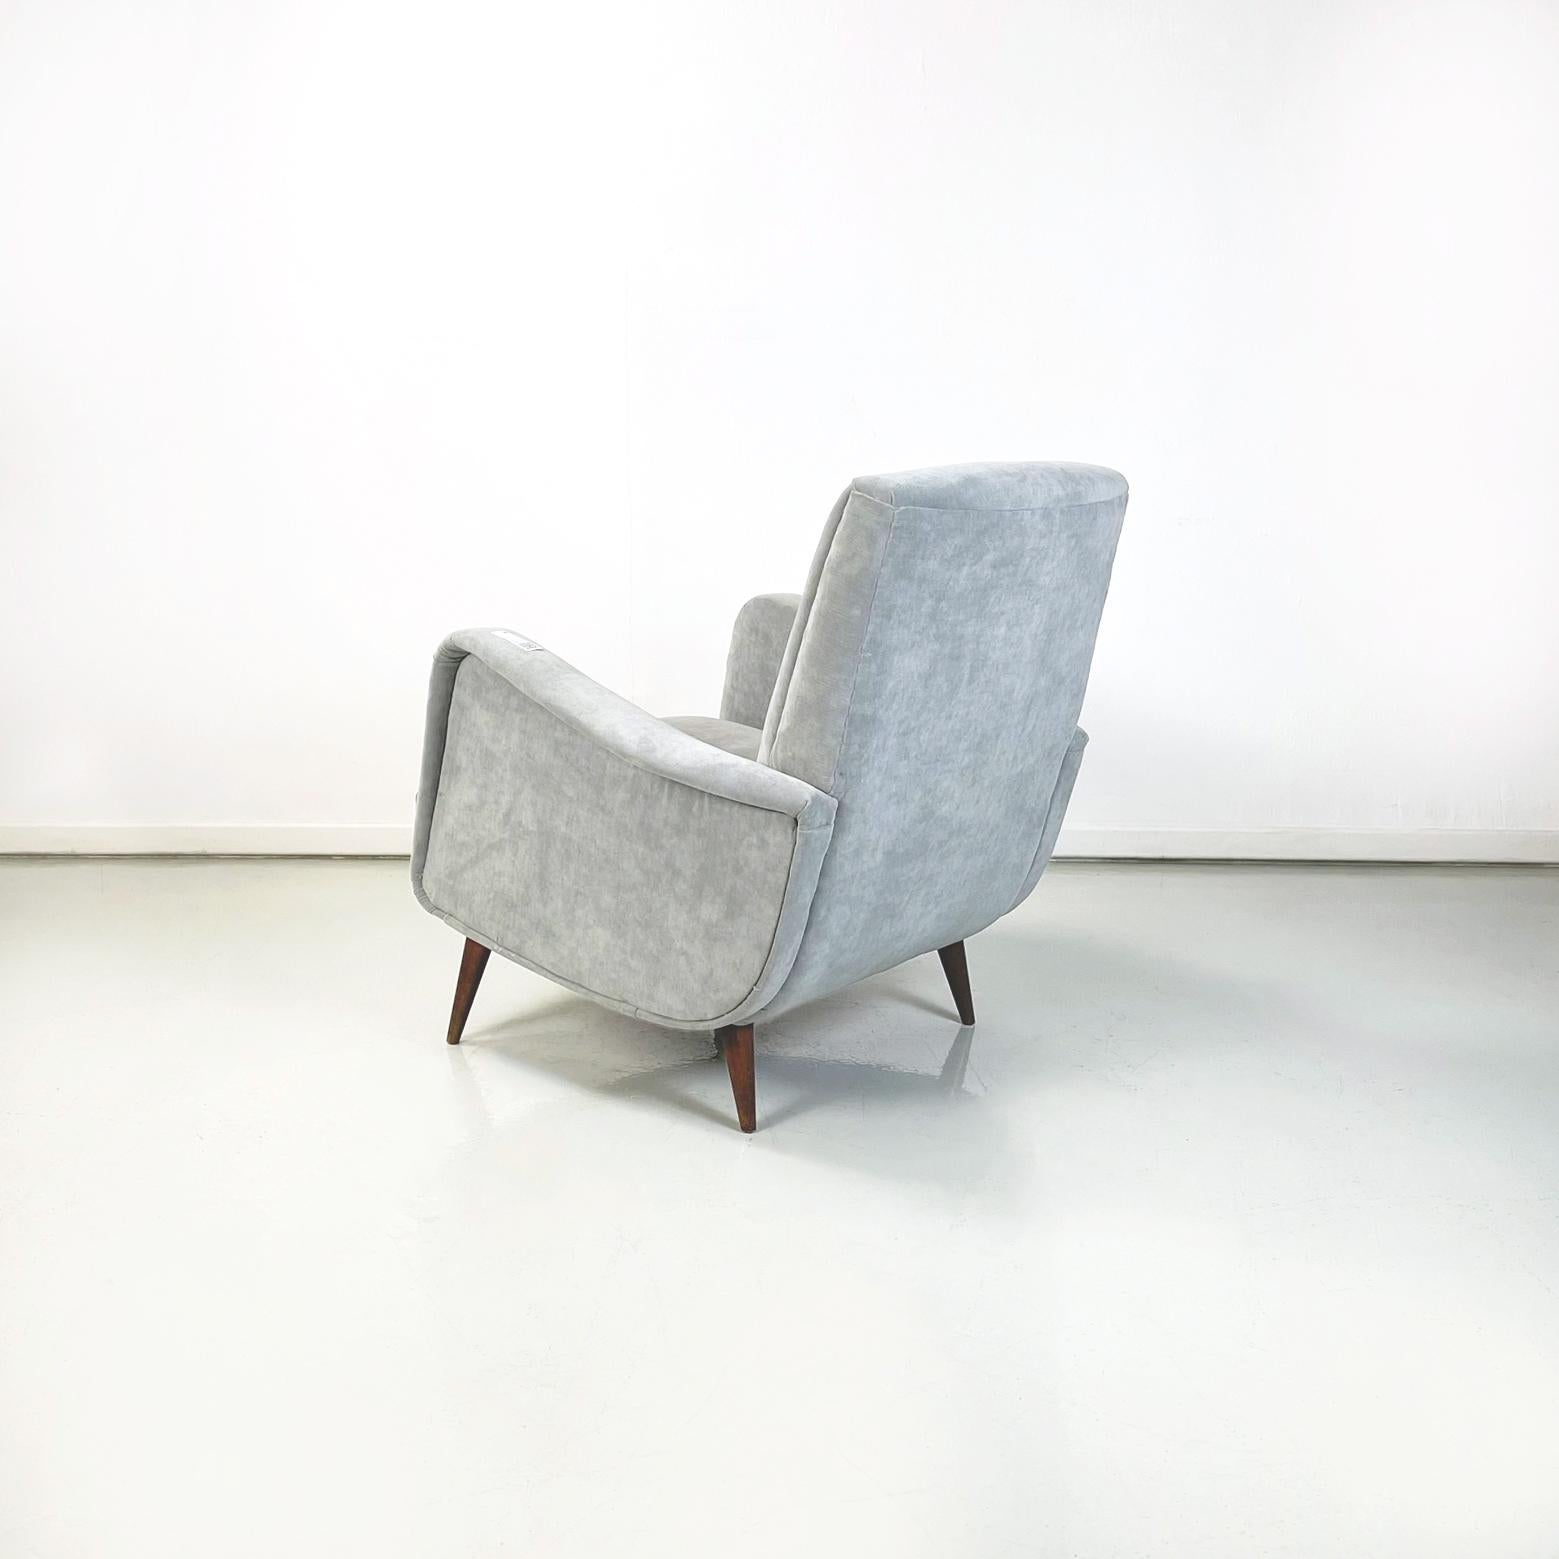 Italian Mid-Century Modern Armchairs in Light Gray Velvet and Wood, 1960s For Sale 1